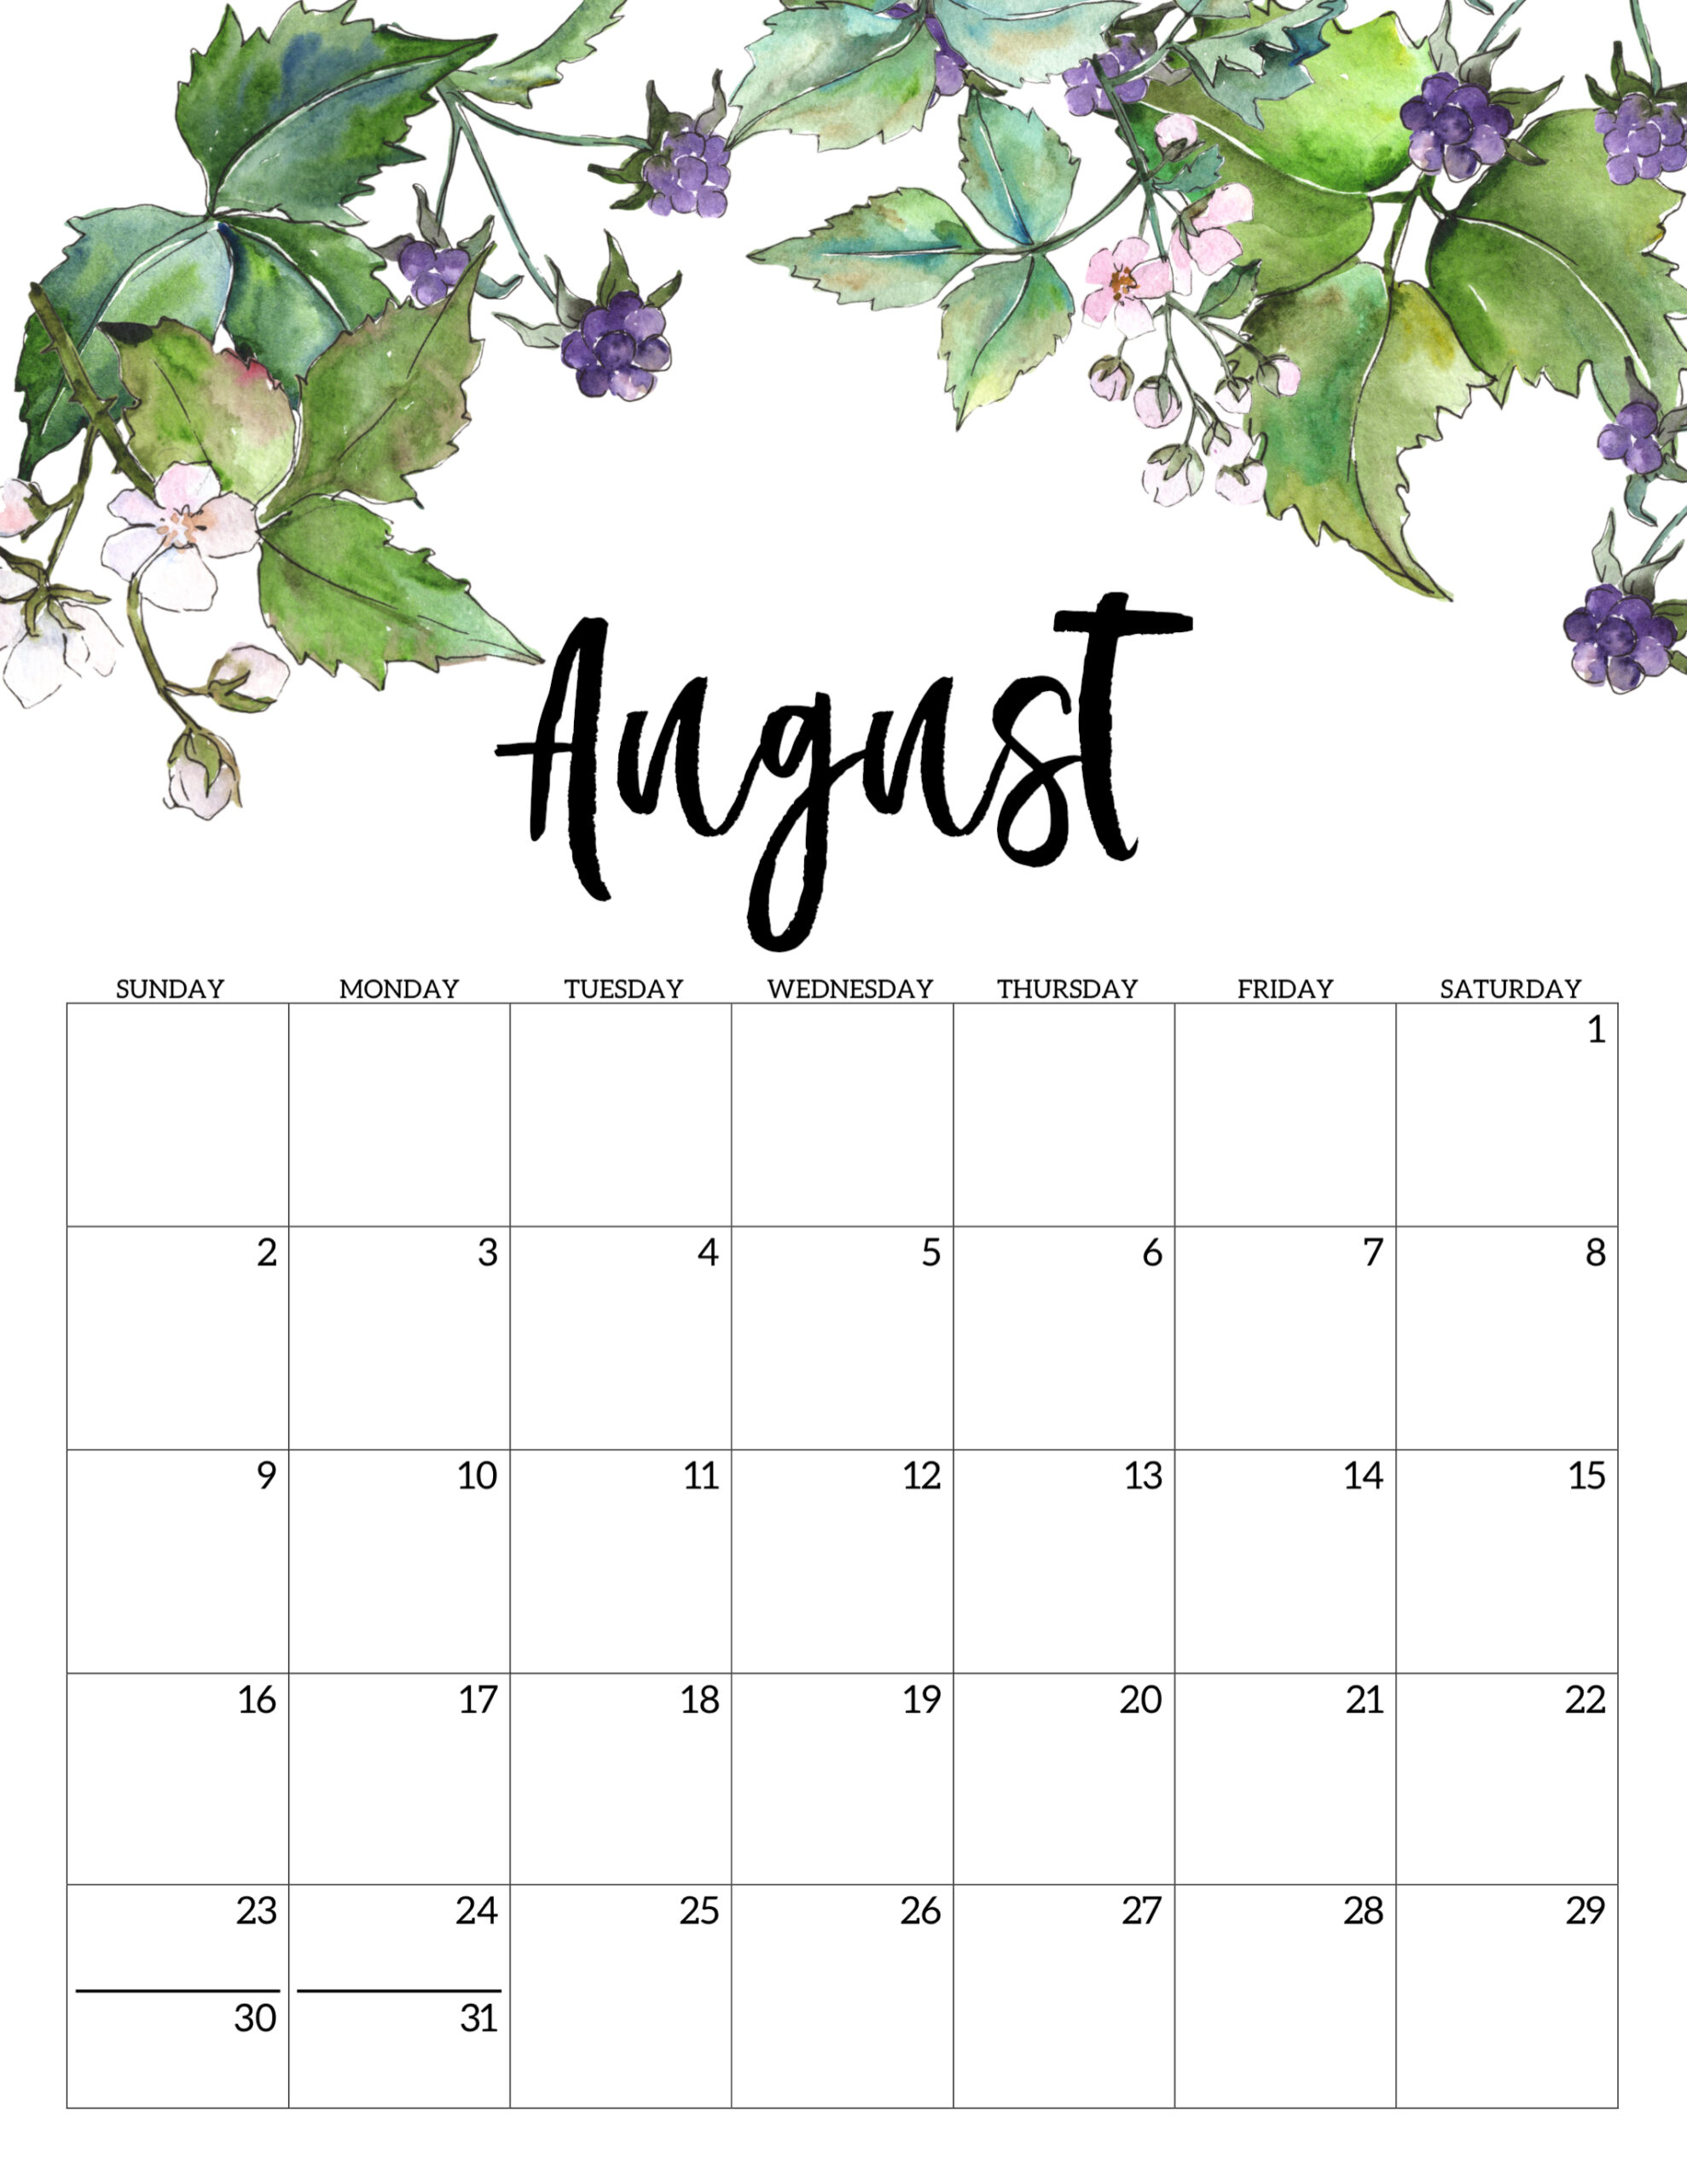 2020 Free Printable Calendar - Floral | Paper Trail Design